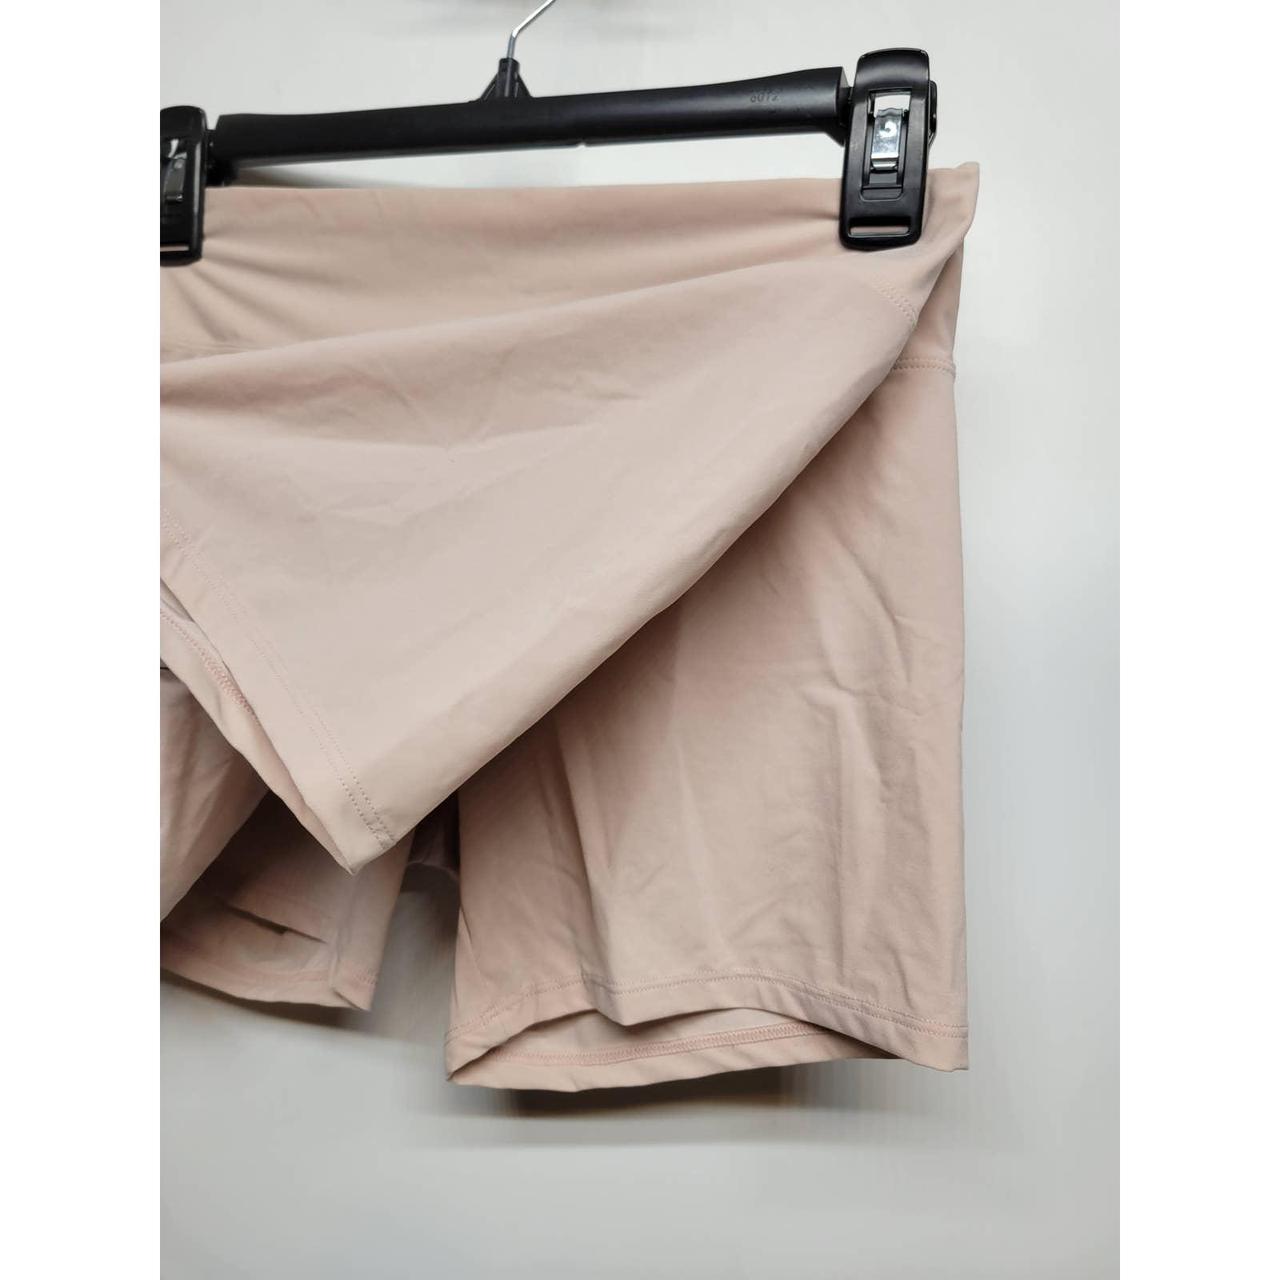 Product Image 3 - Bliss Flex 2-Pack Shorts
NATORI
Size Small
New